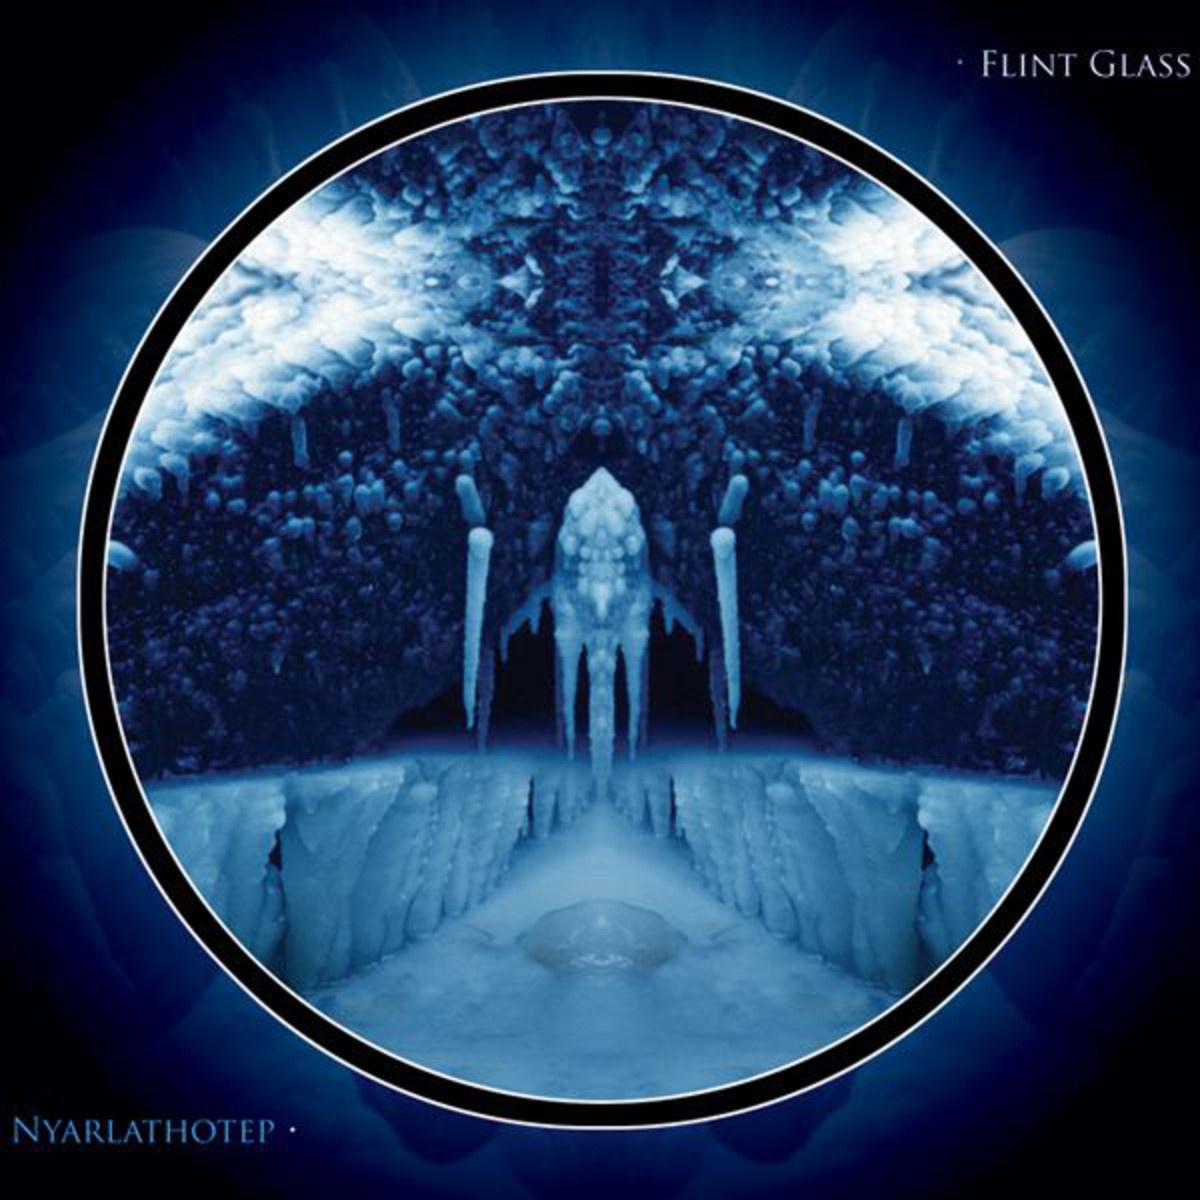 Flint Glass - Angular space